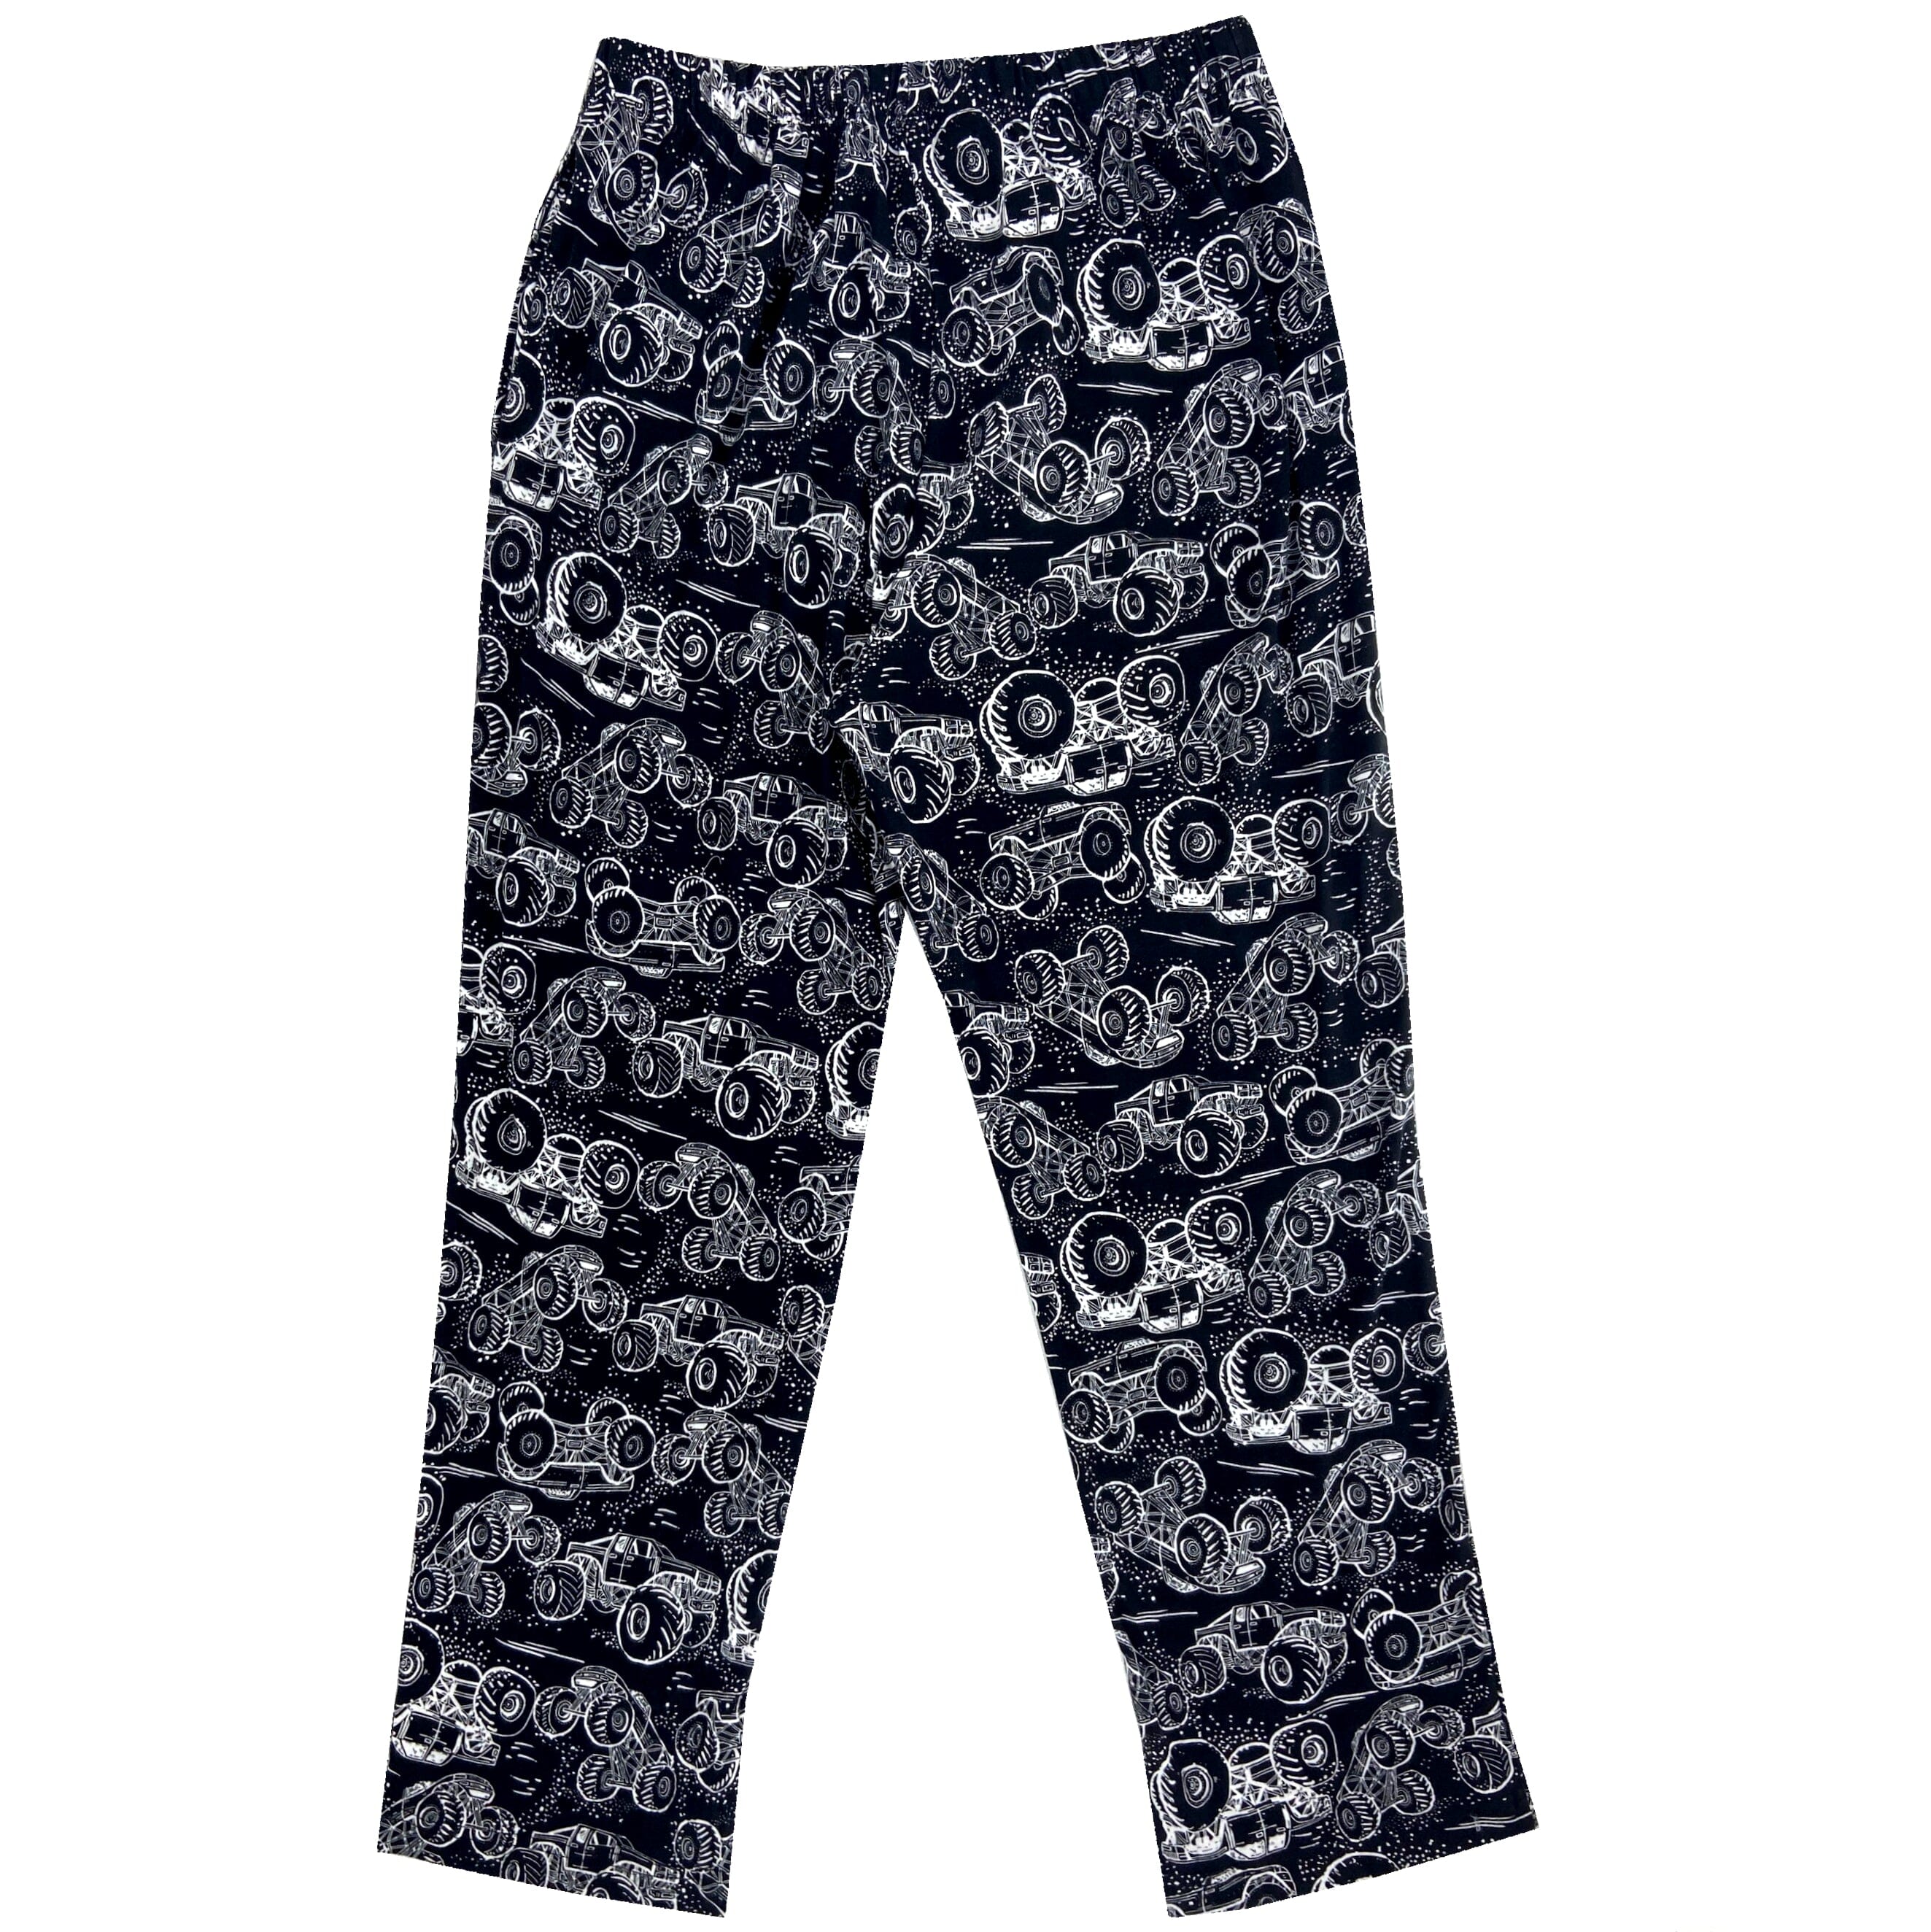 Men's Black Monster Truck Patterned Cotton Knit Long Pajama PJ Pants